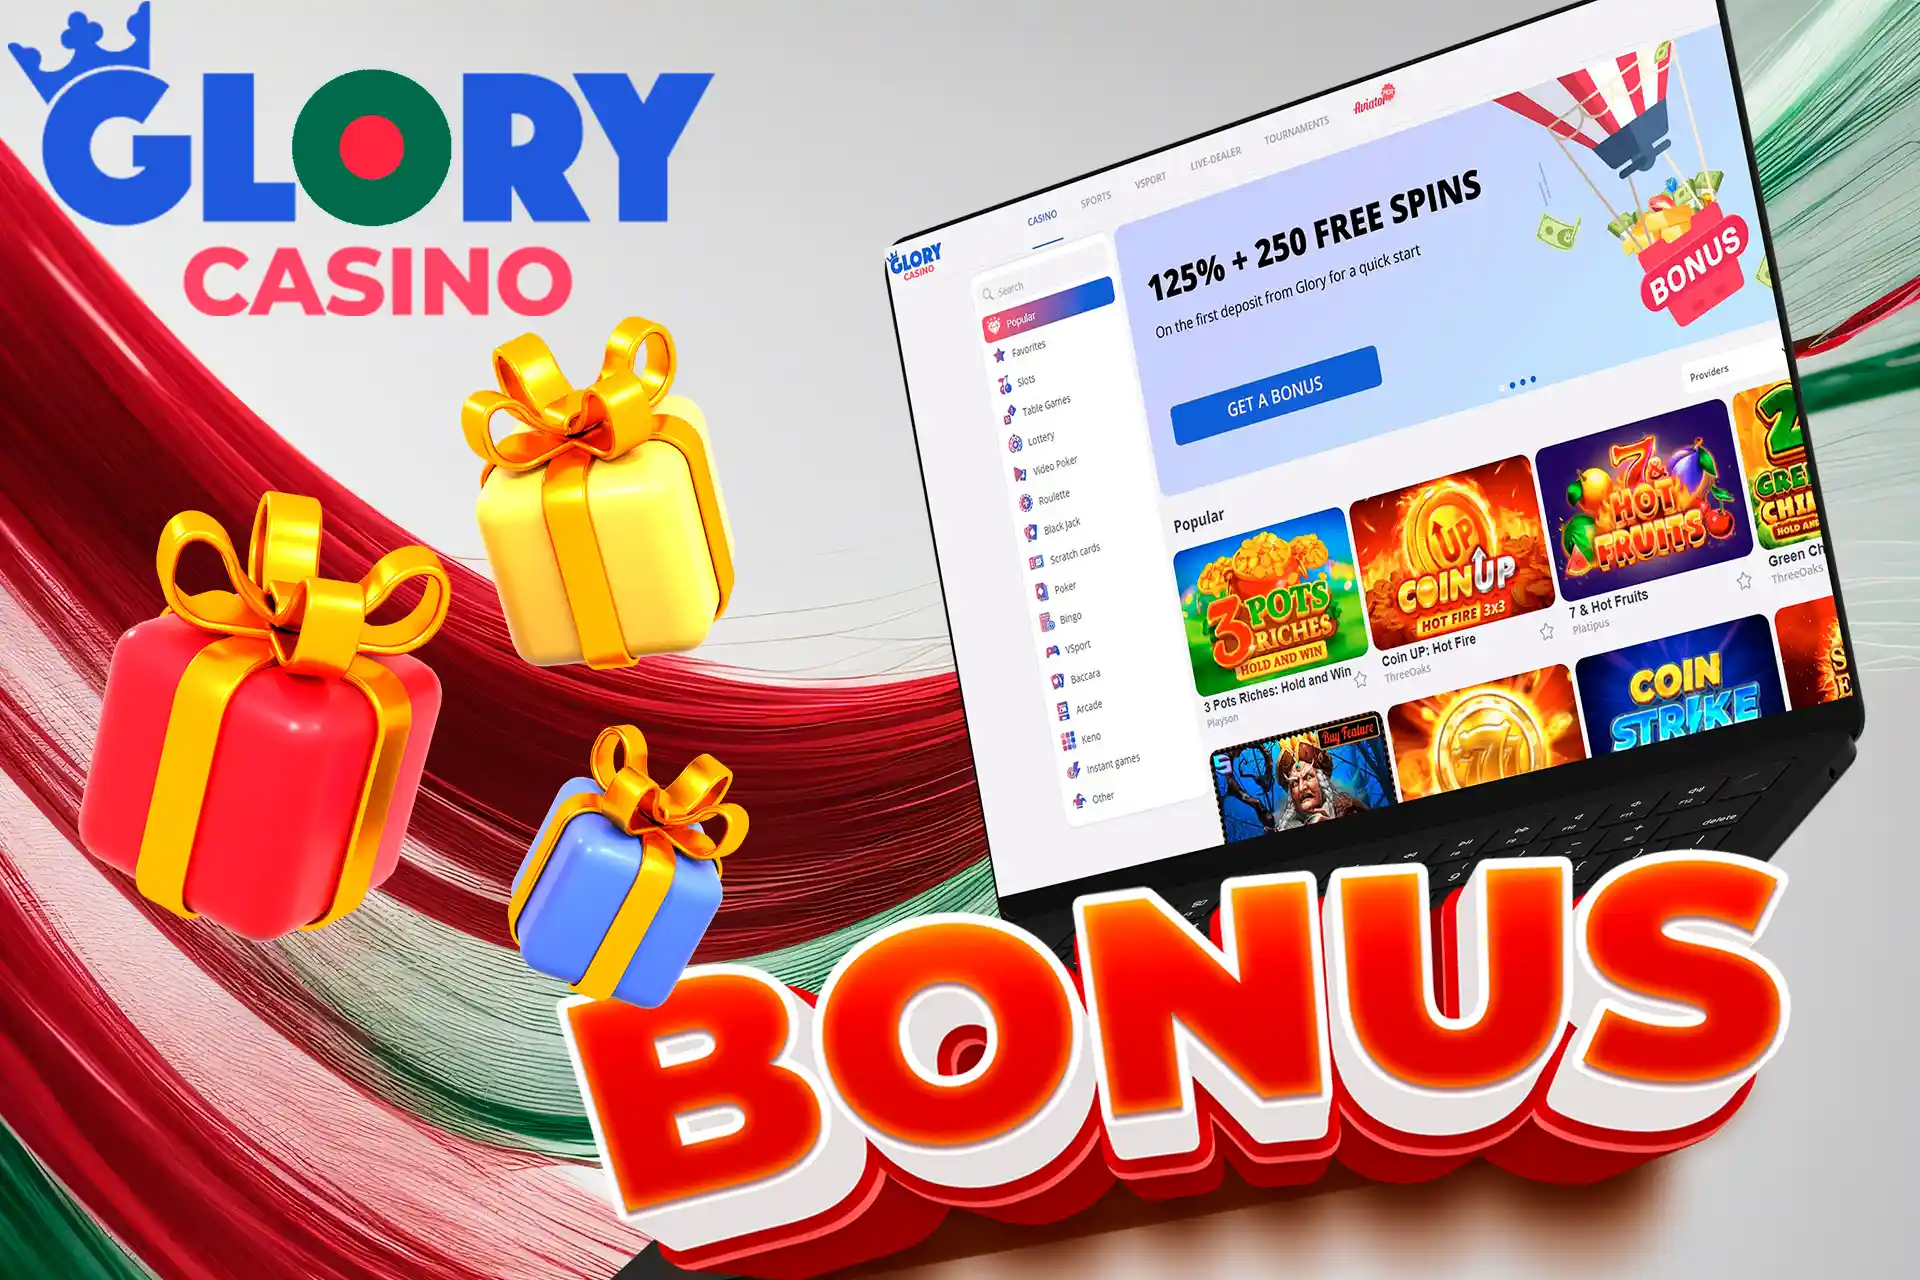 Get bonuses at Glory Casino Bangladesh